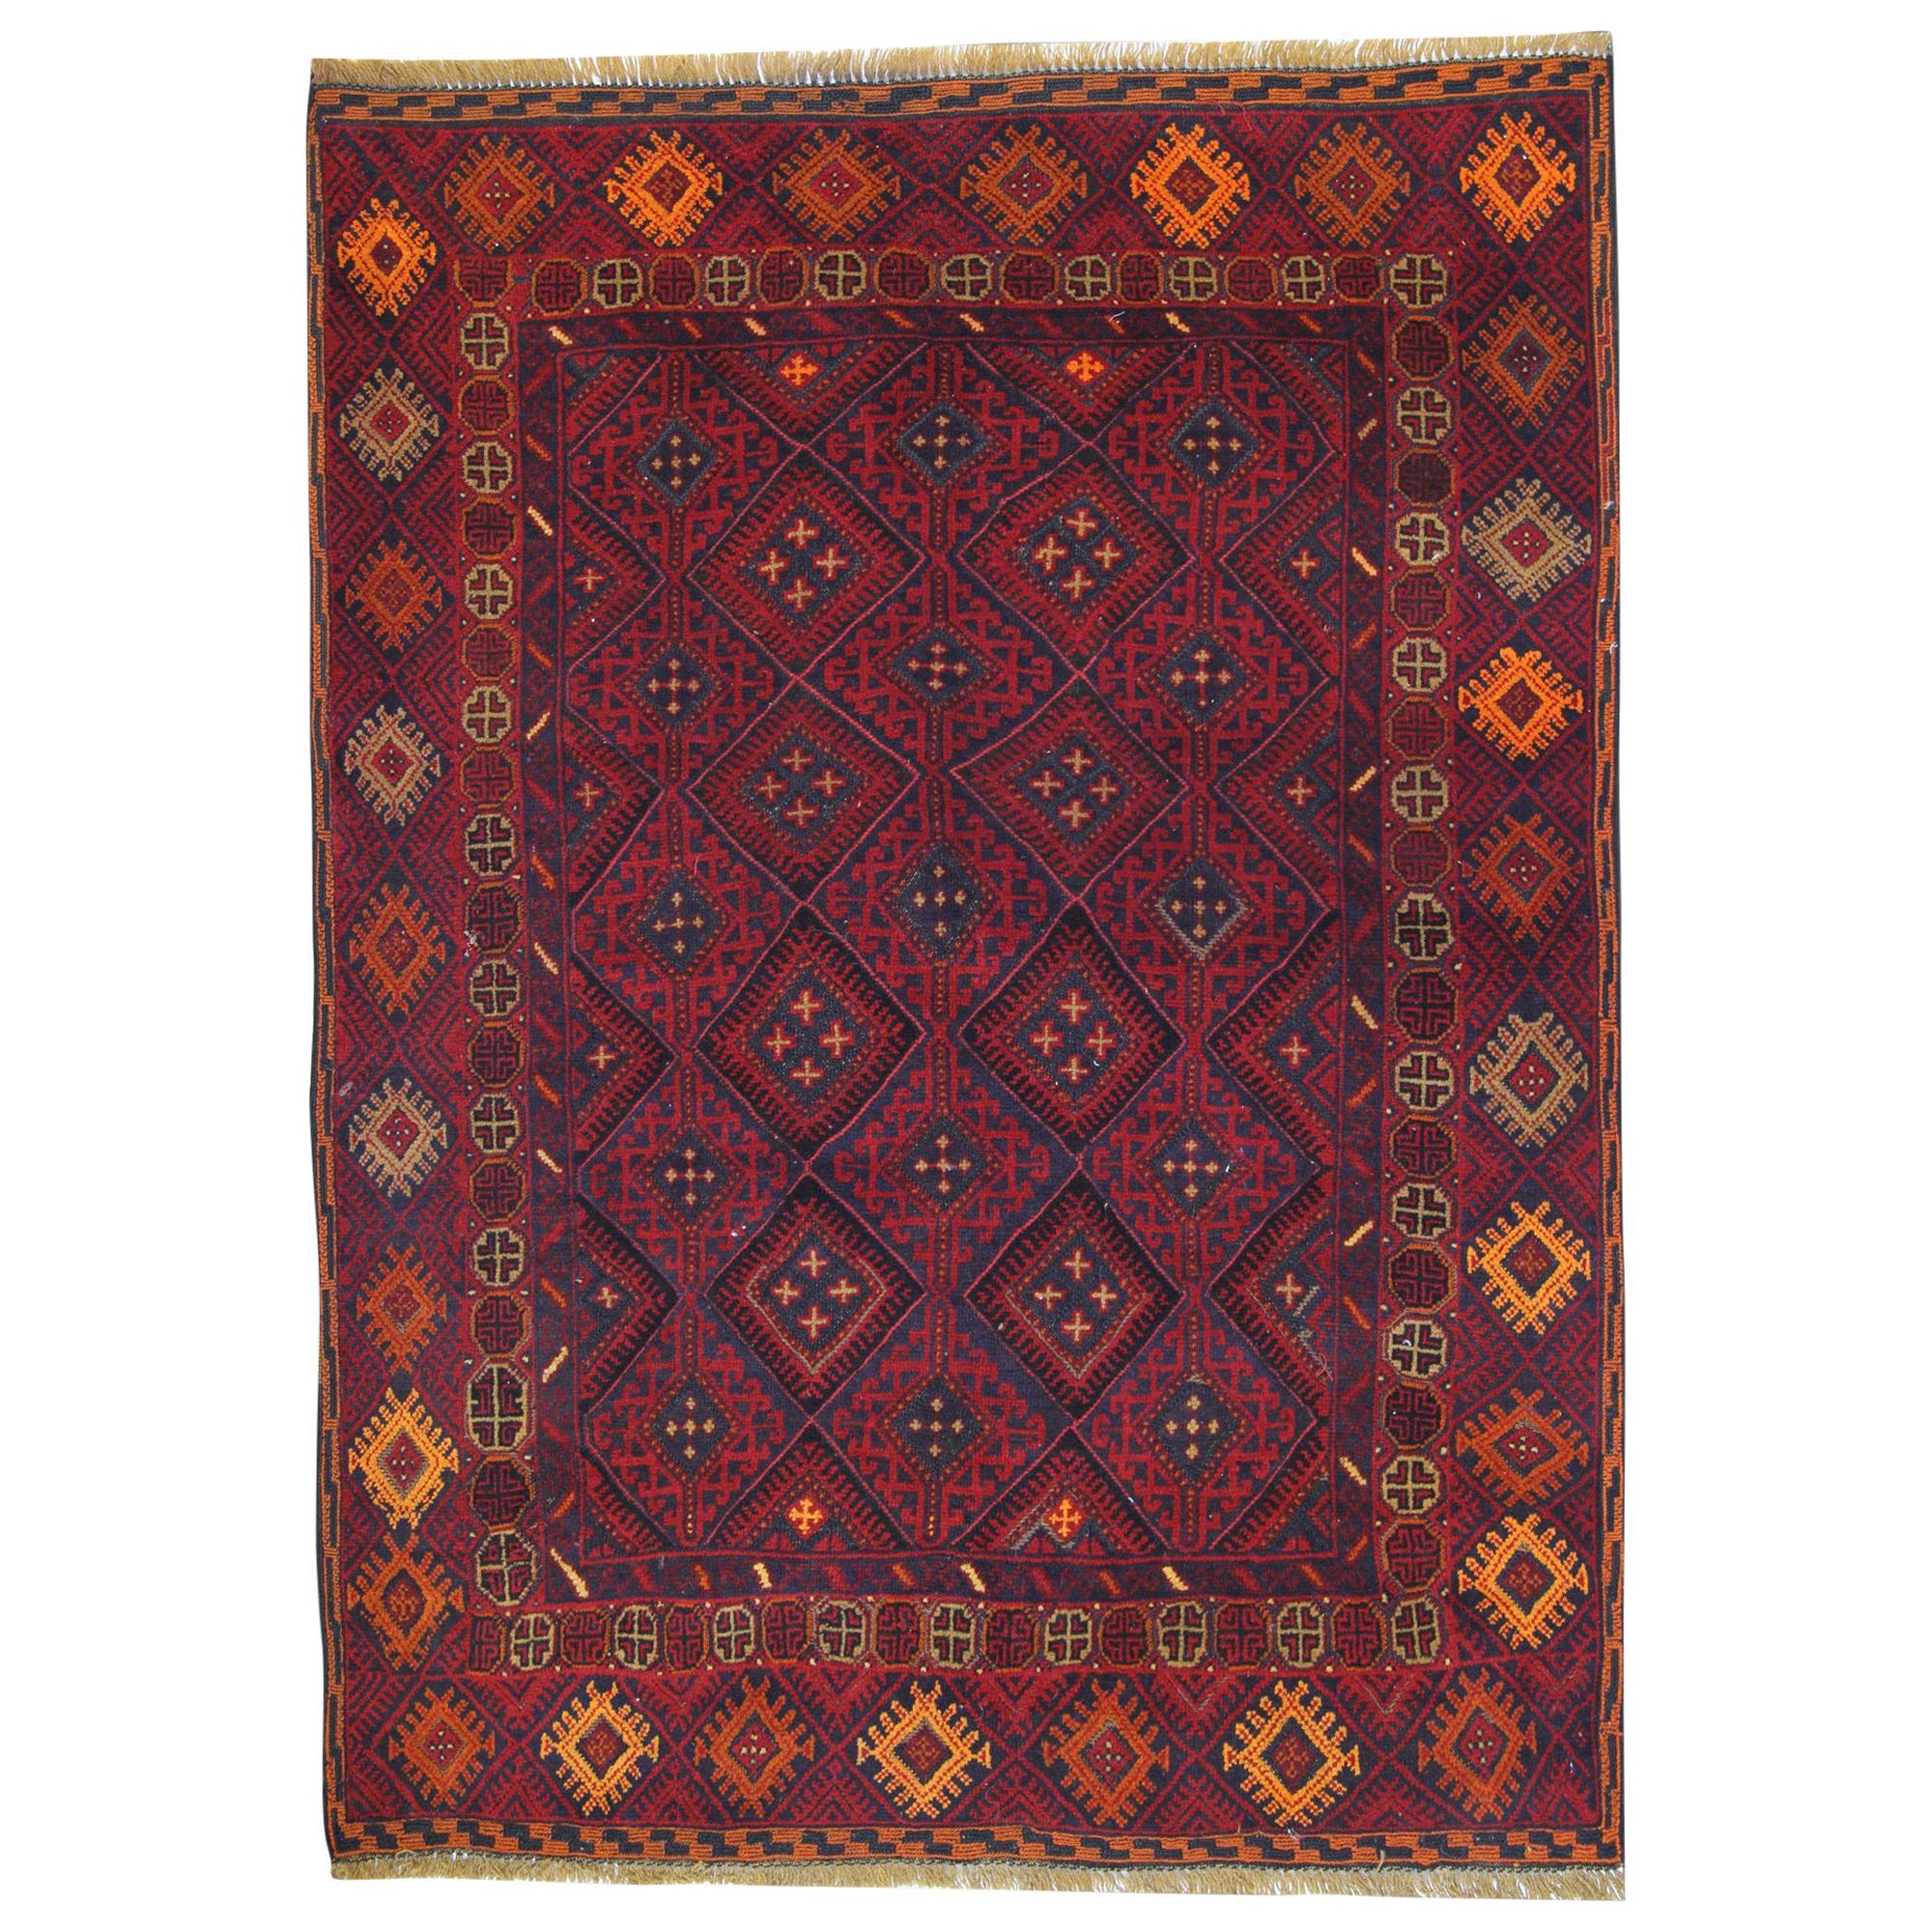 Wool Handmade Carpet Oriental Rug Traditional Deep Red Rugs Square Turkmen